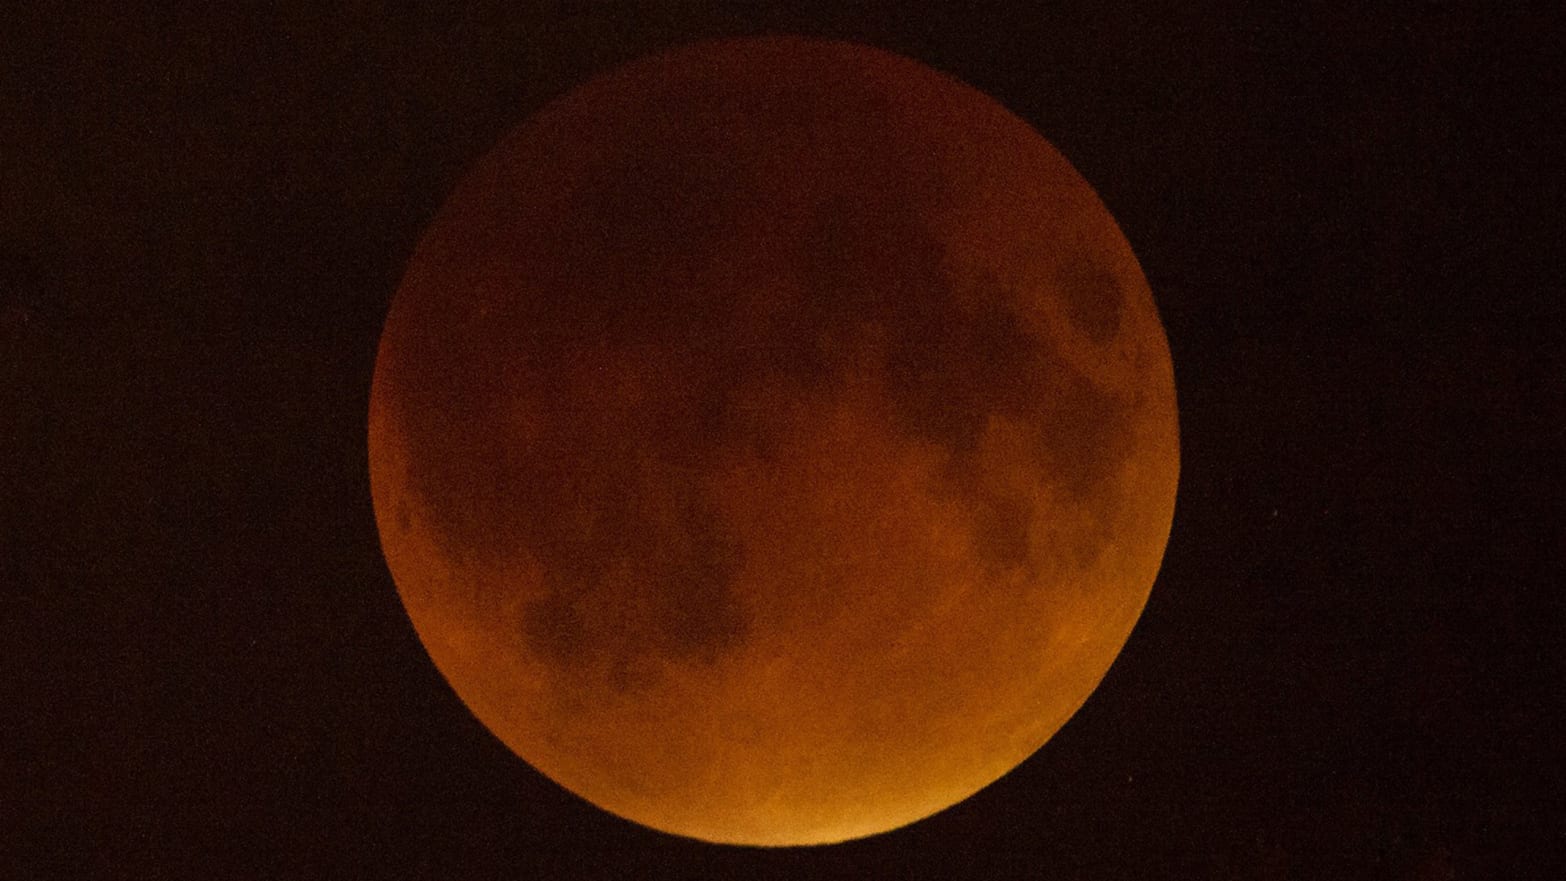 super blue blood moon red supermoon lunar eclipse rare penumbra umbra sun shadow next west east new york how do i see where watch livestream